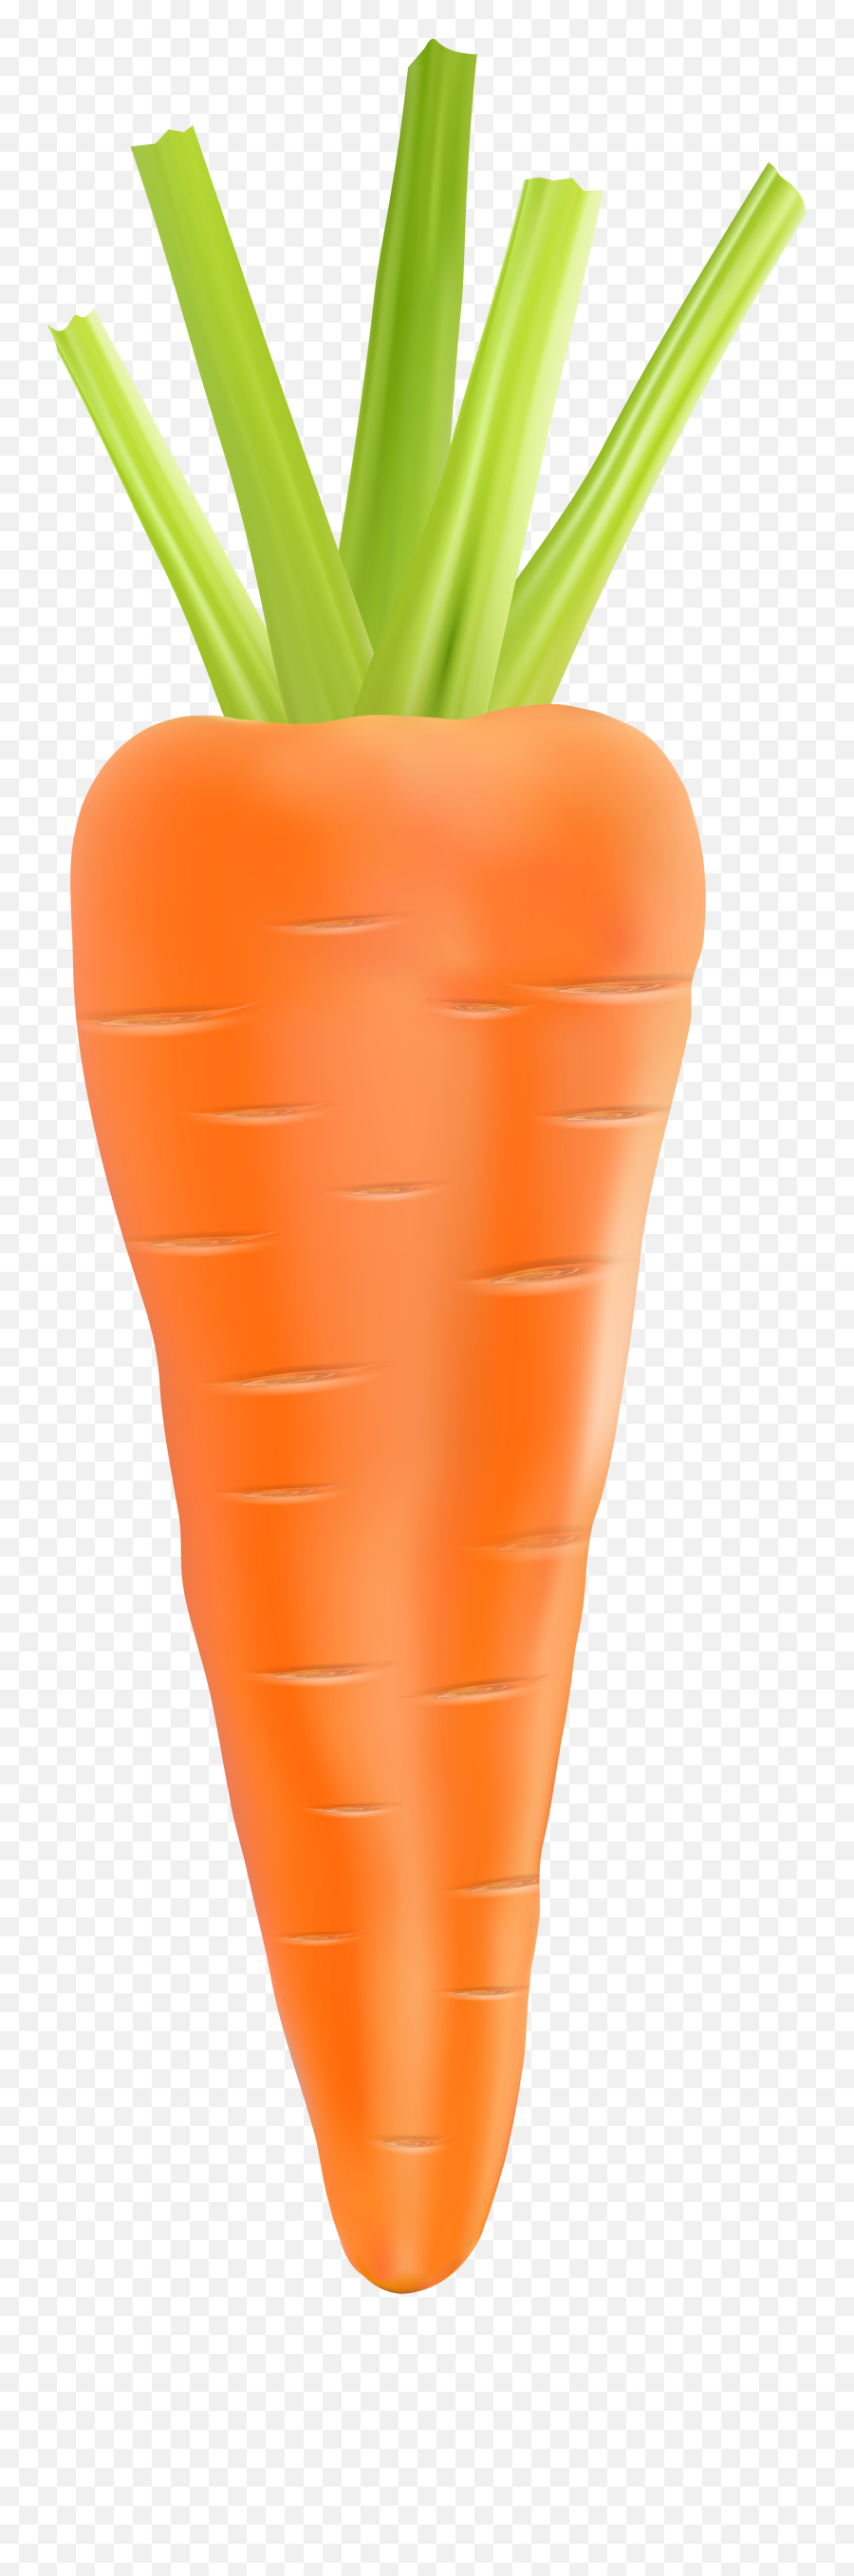 Carrot Clipart Transparent Background - Carrot Png,Carrot Transparent Background